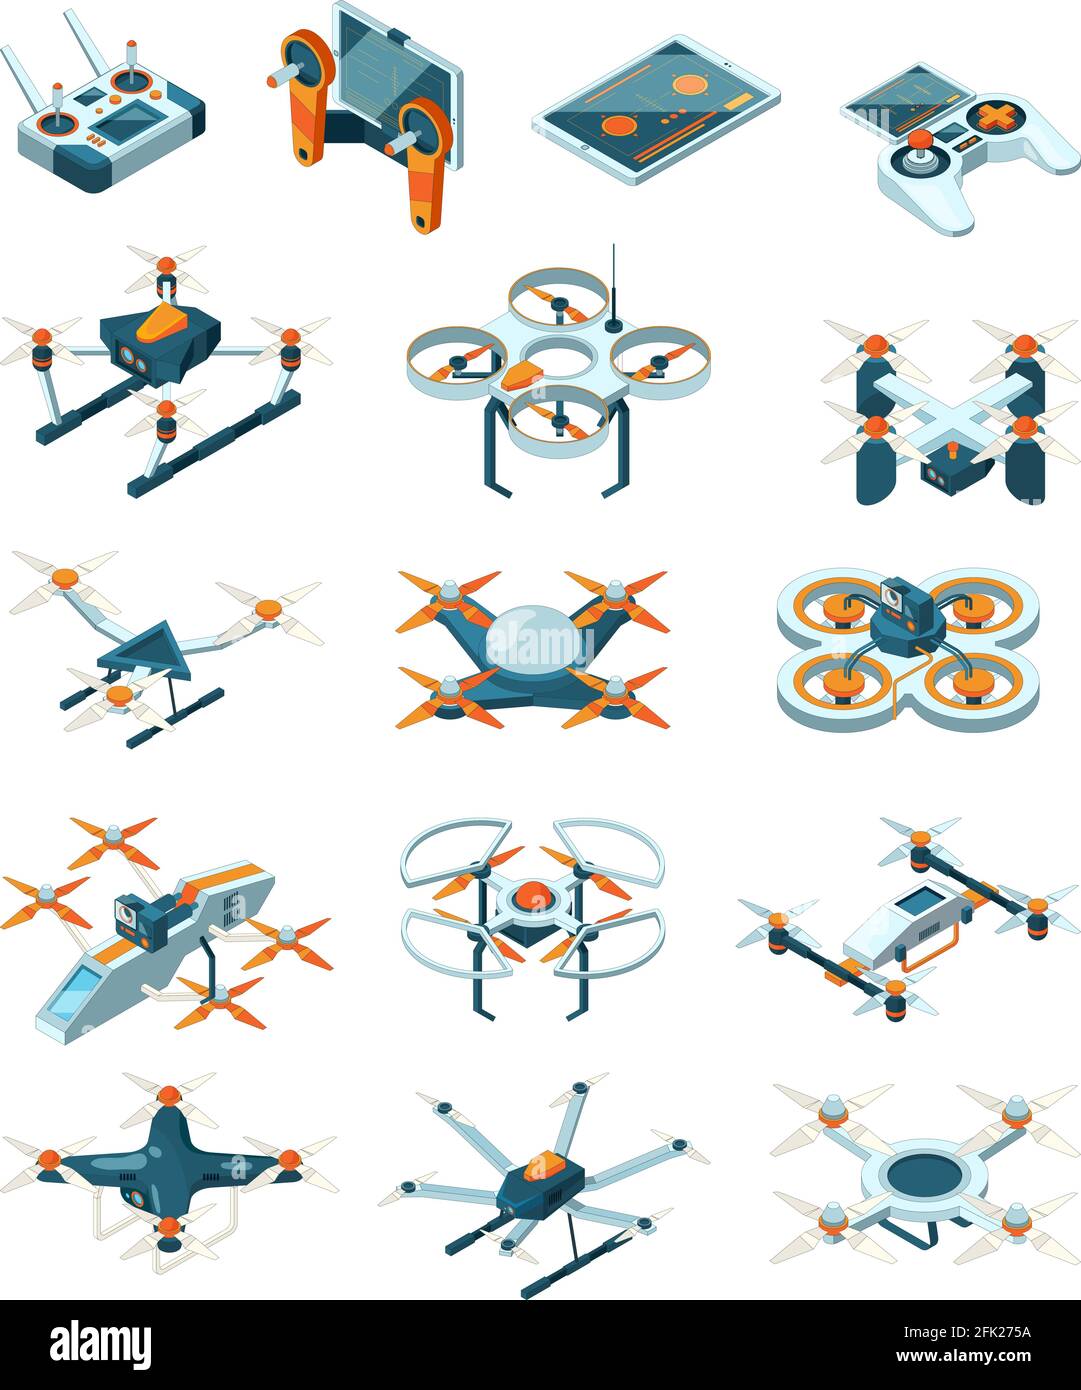 Drohnen isometrisch. Flugzeuge Zukunft Moderne Technologien Transport unbemannte Luftfahrt Vektor-Set Stock Vektor